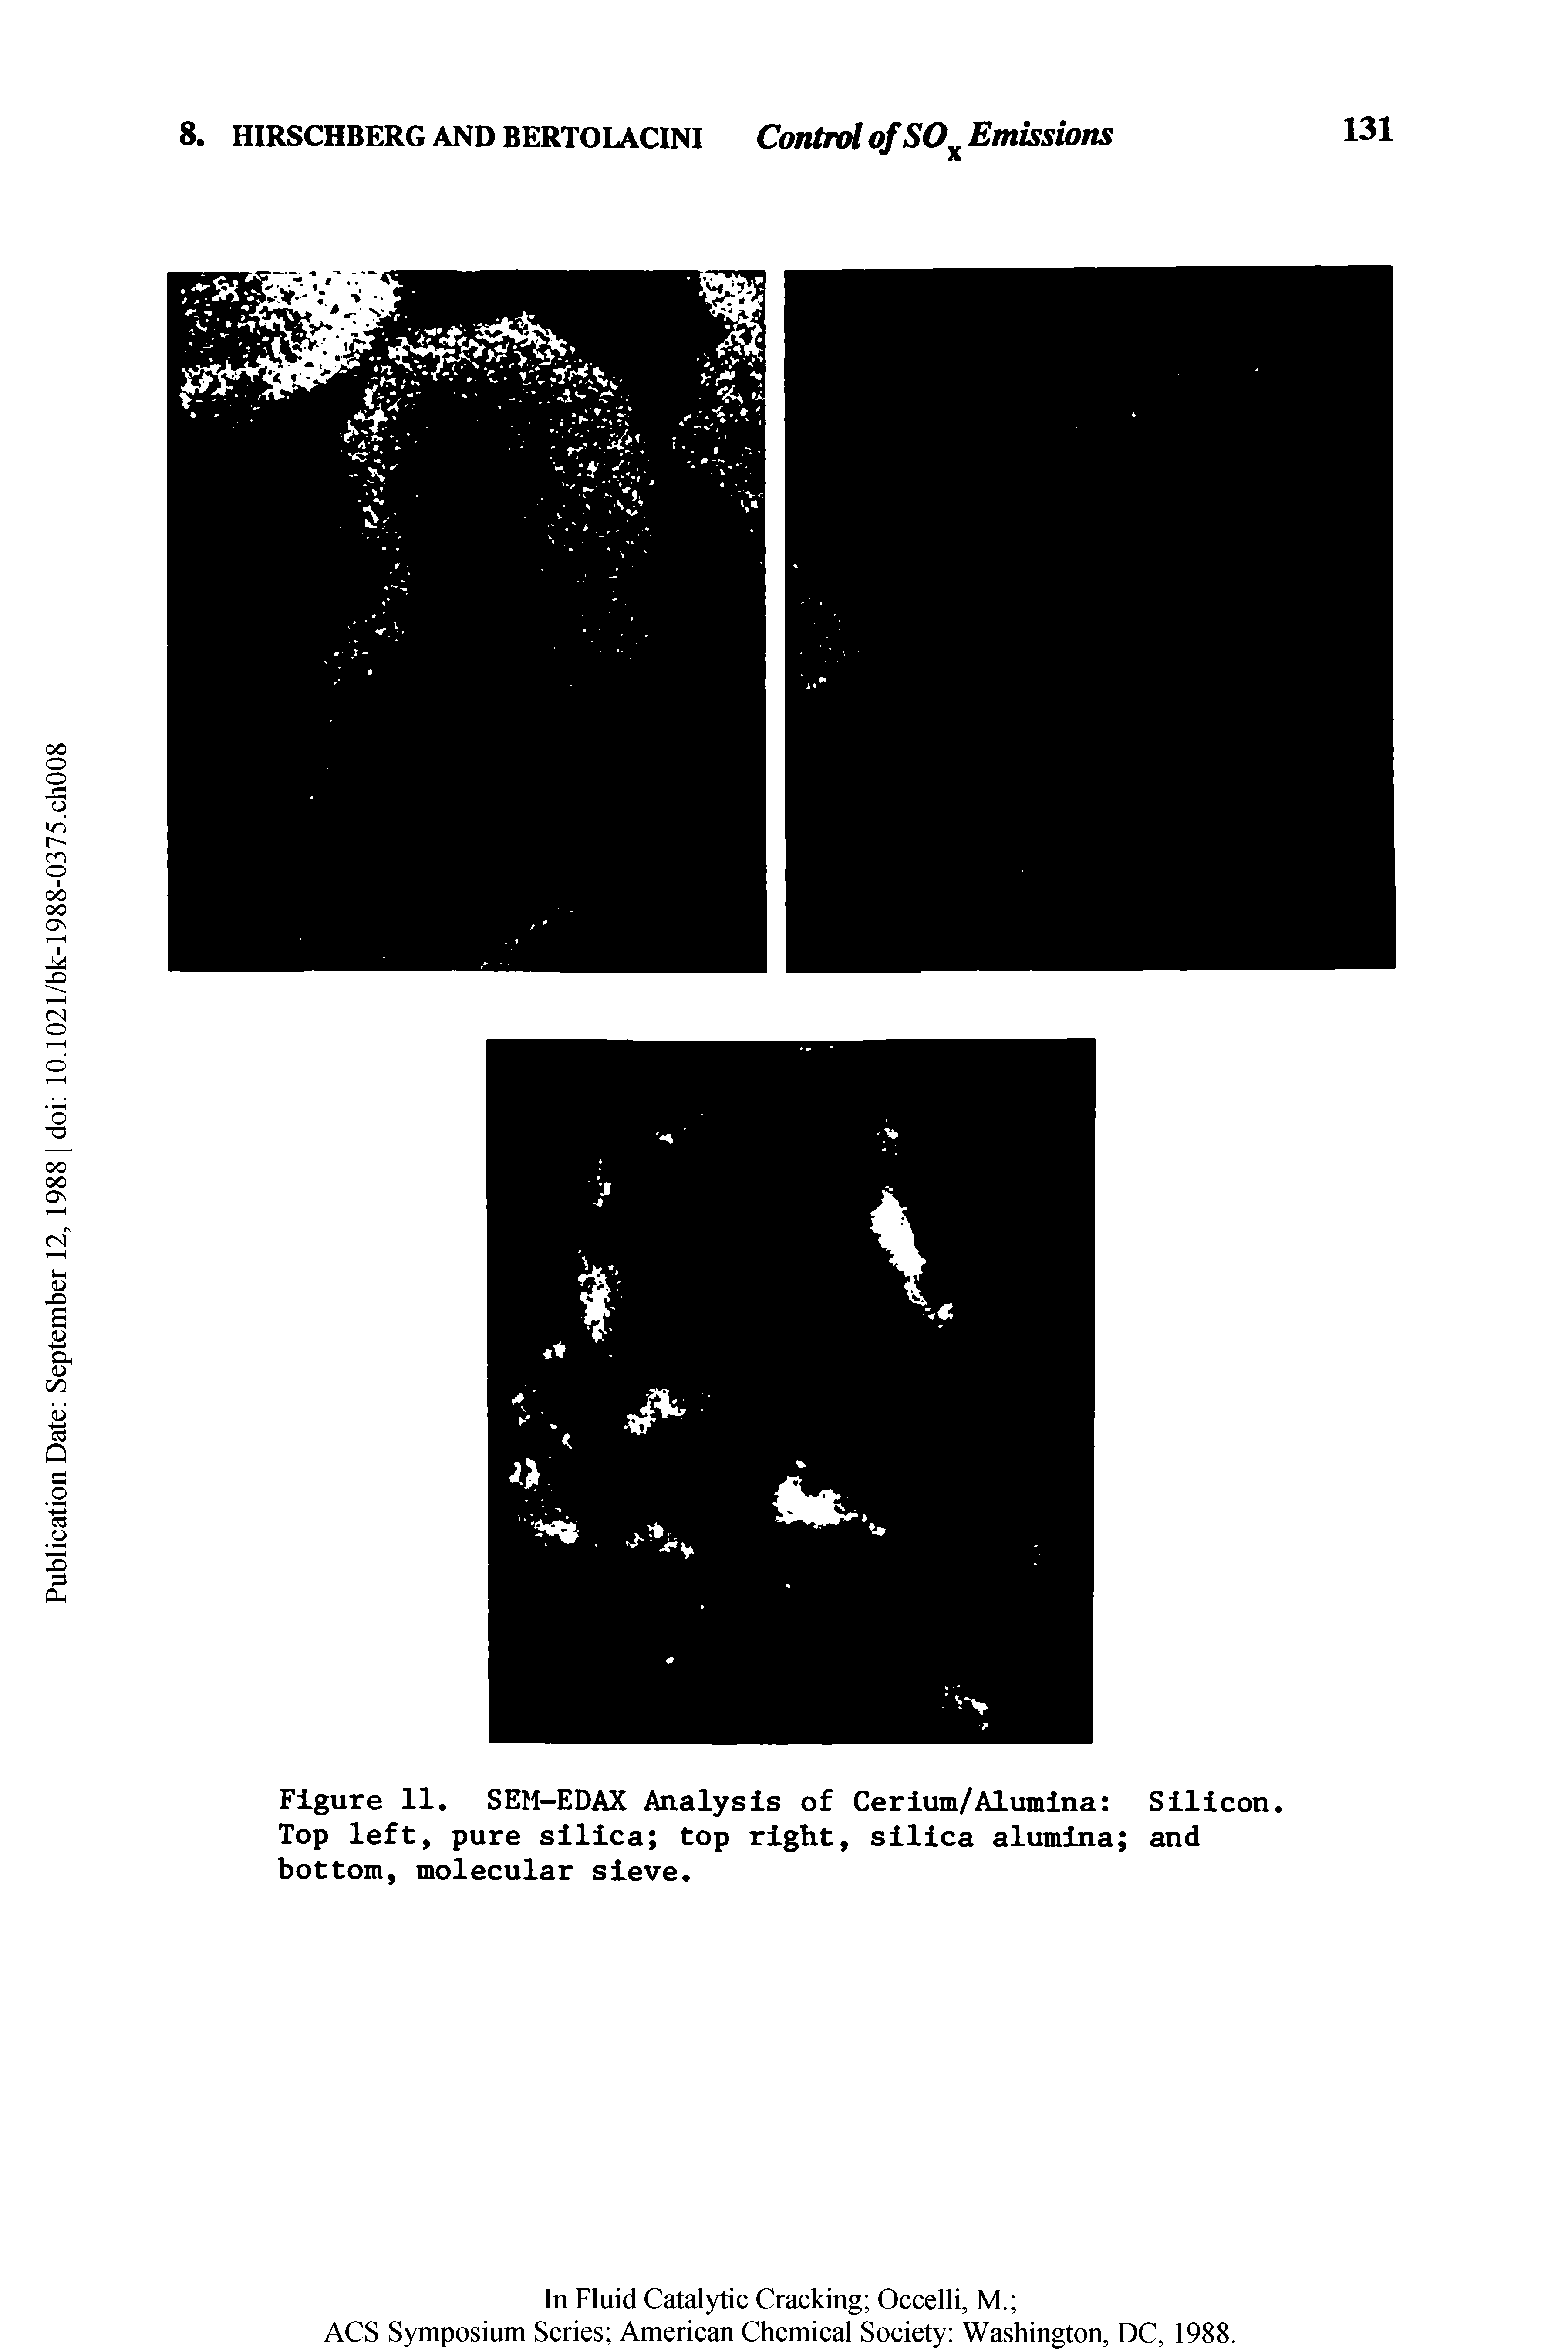 Figure 11. SEM-EDAX Analysis of Cerium/Alumina Silicon. Top left, pure silica top right, silica alumina and bottom, molecular sieve.